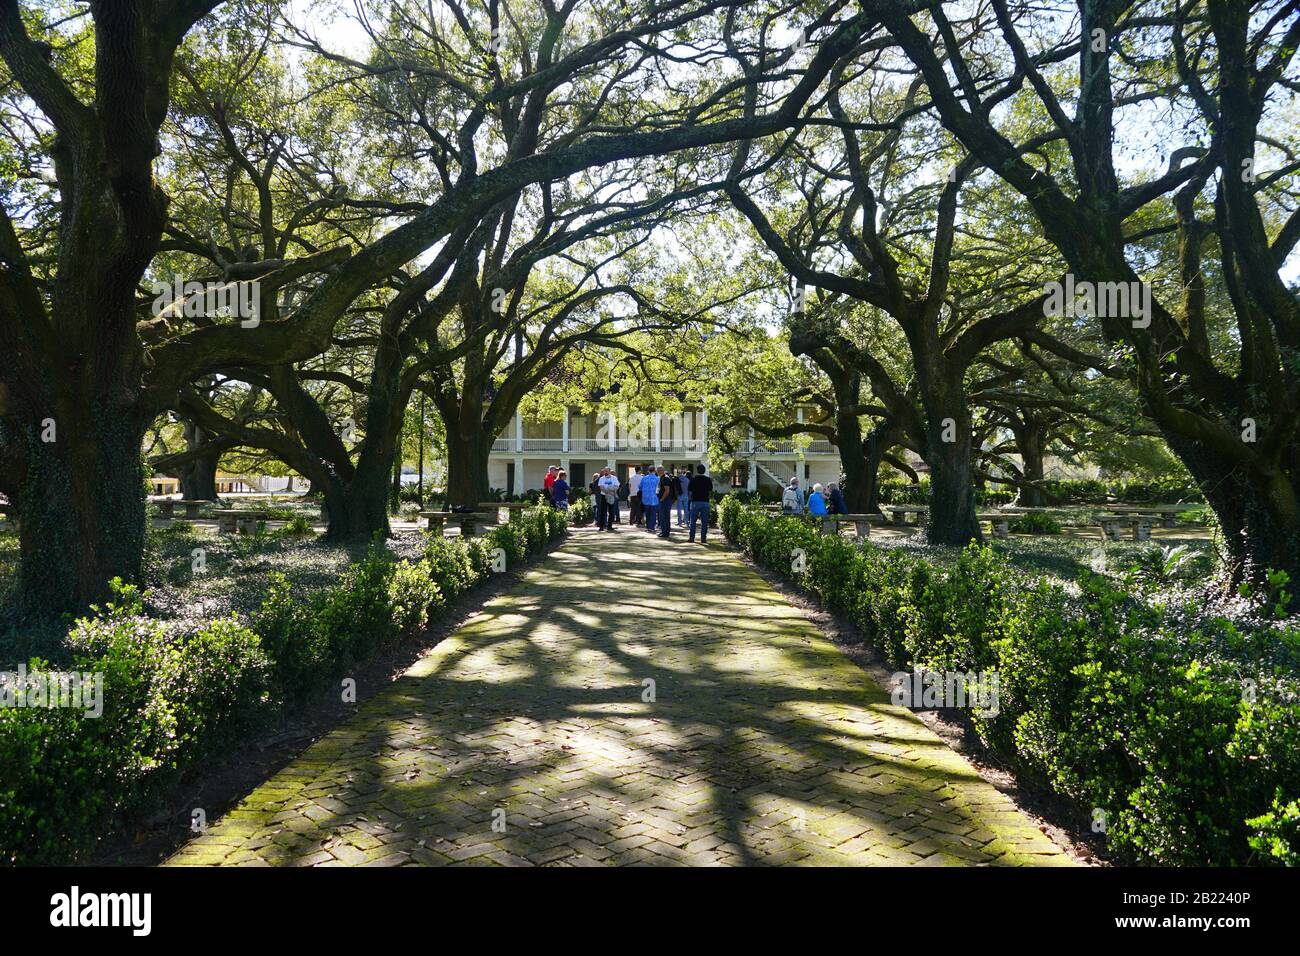 Edgard, Louisiana, U.S.A - February 2, 2020 - The old oak trees by the white mansion of Whitney Plantation Stock Photo